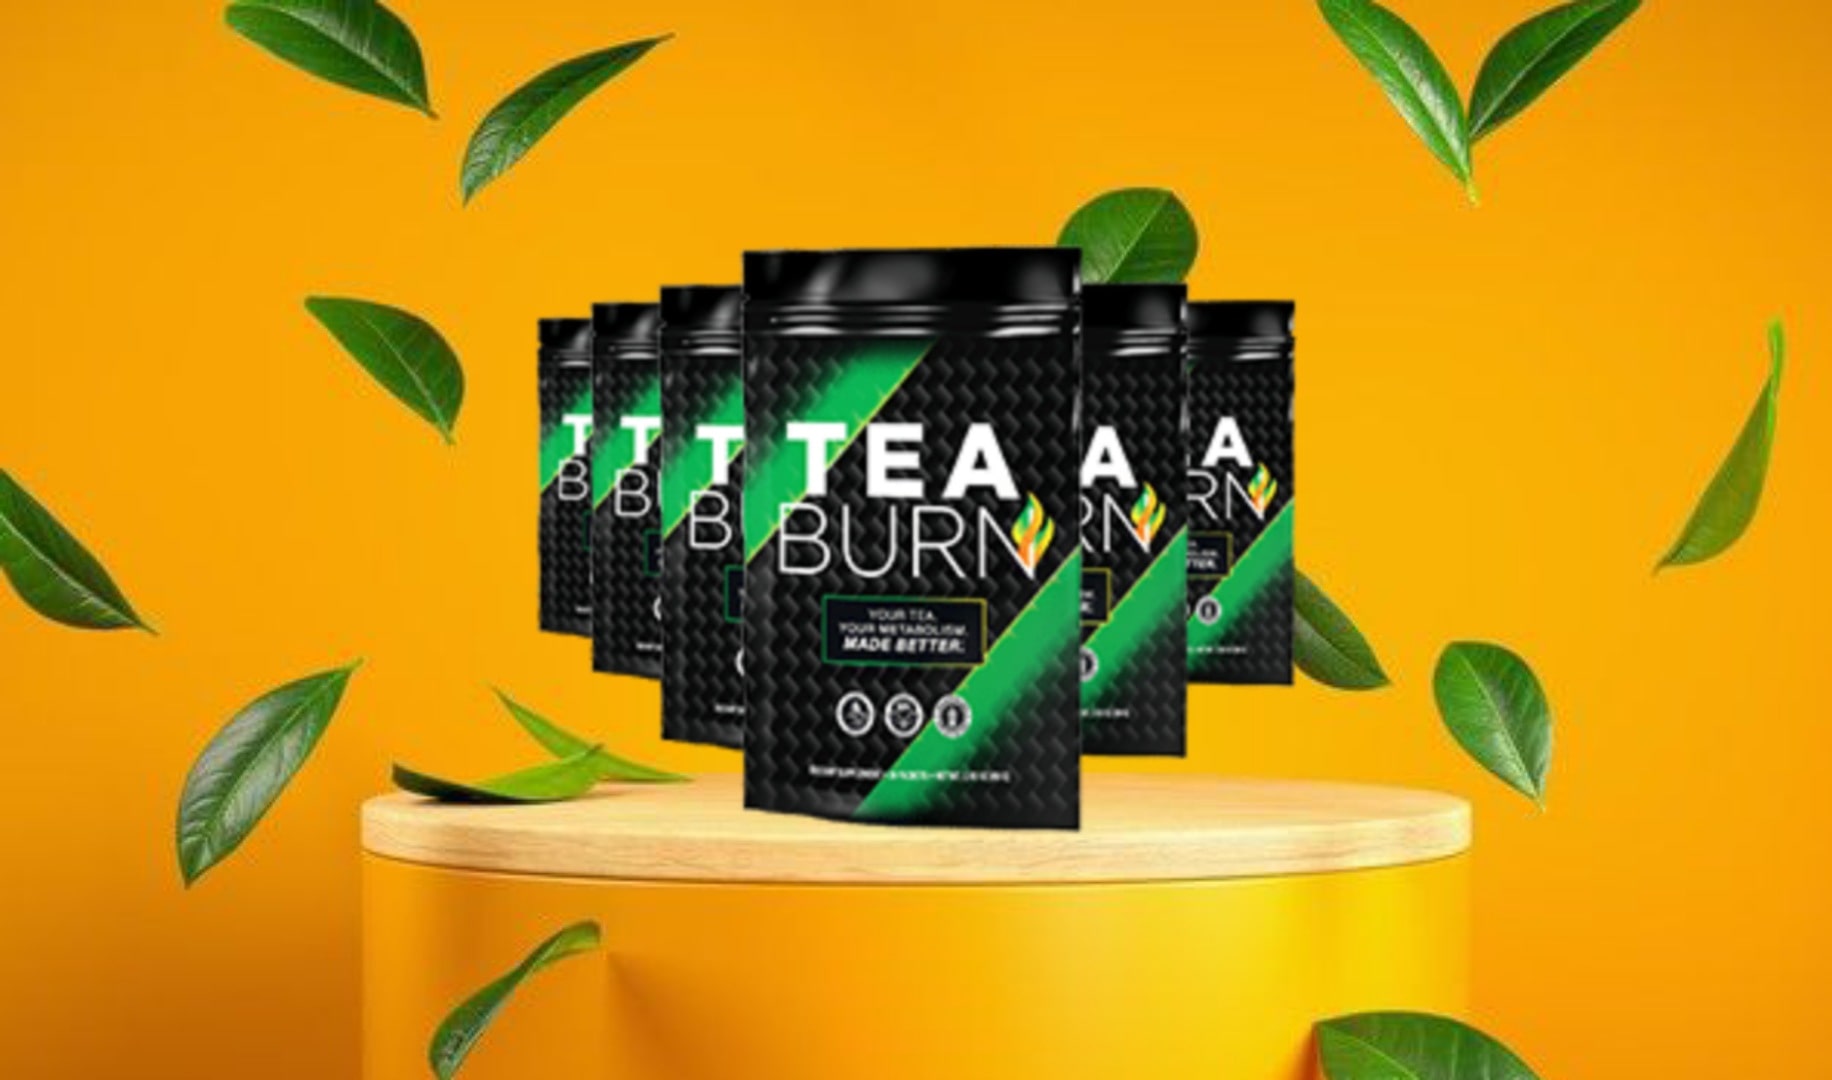 Tea Burn Reviews Read the Scam Alert Before